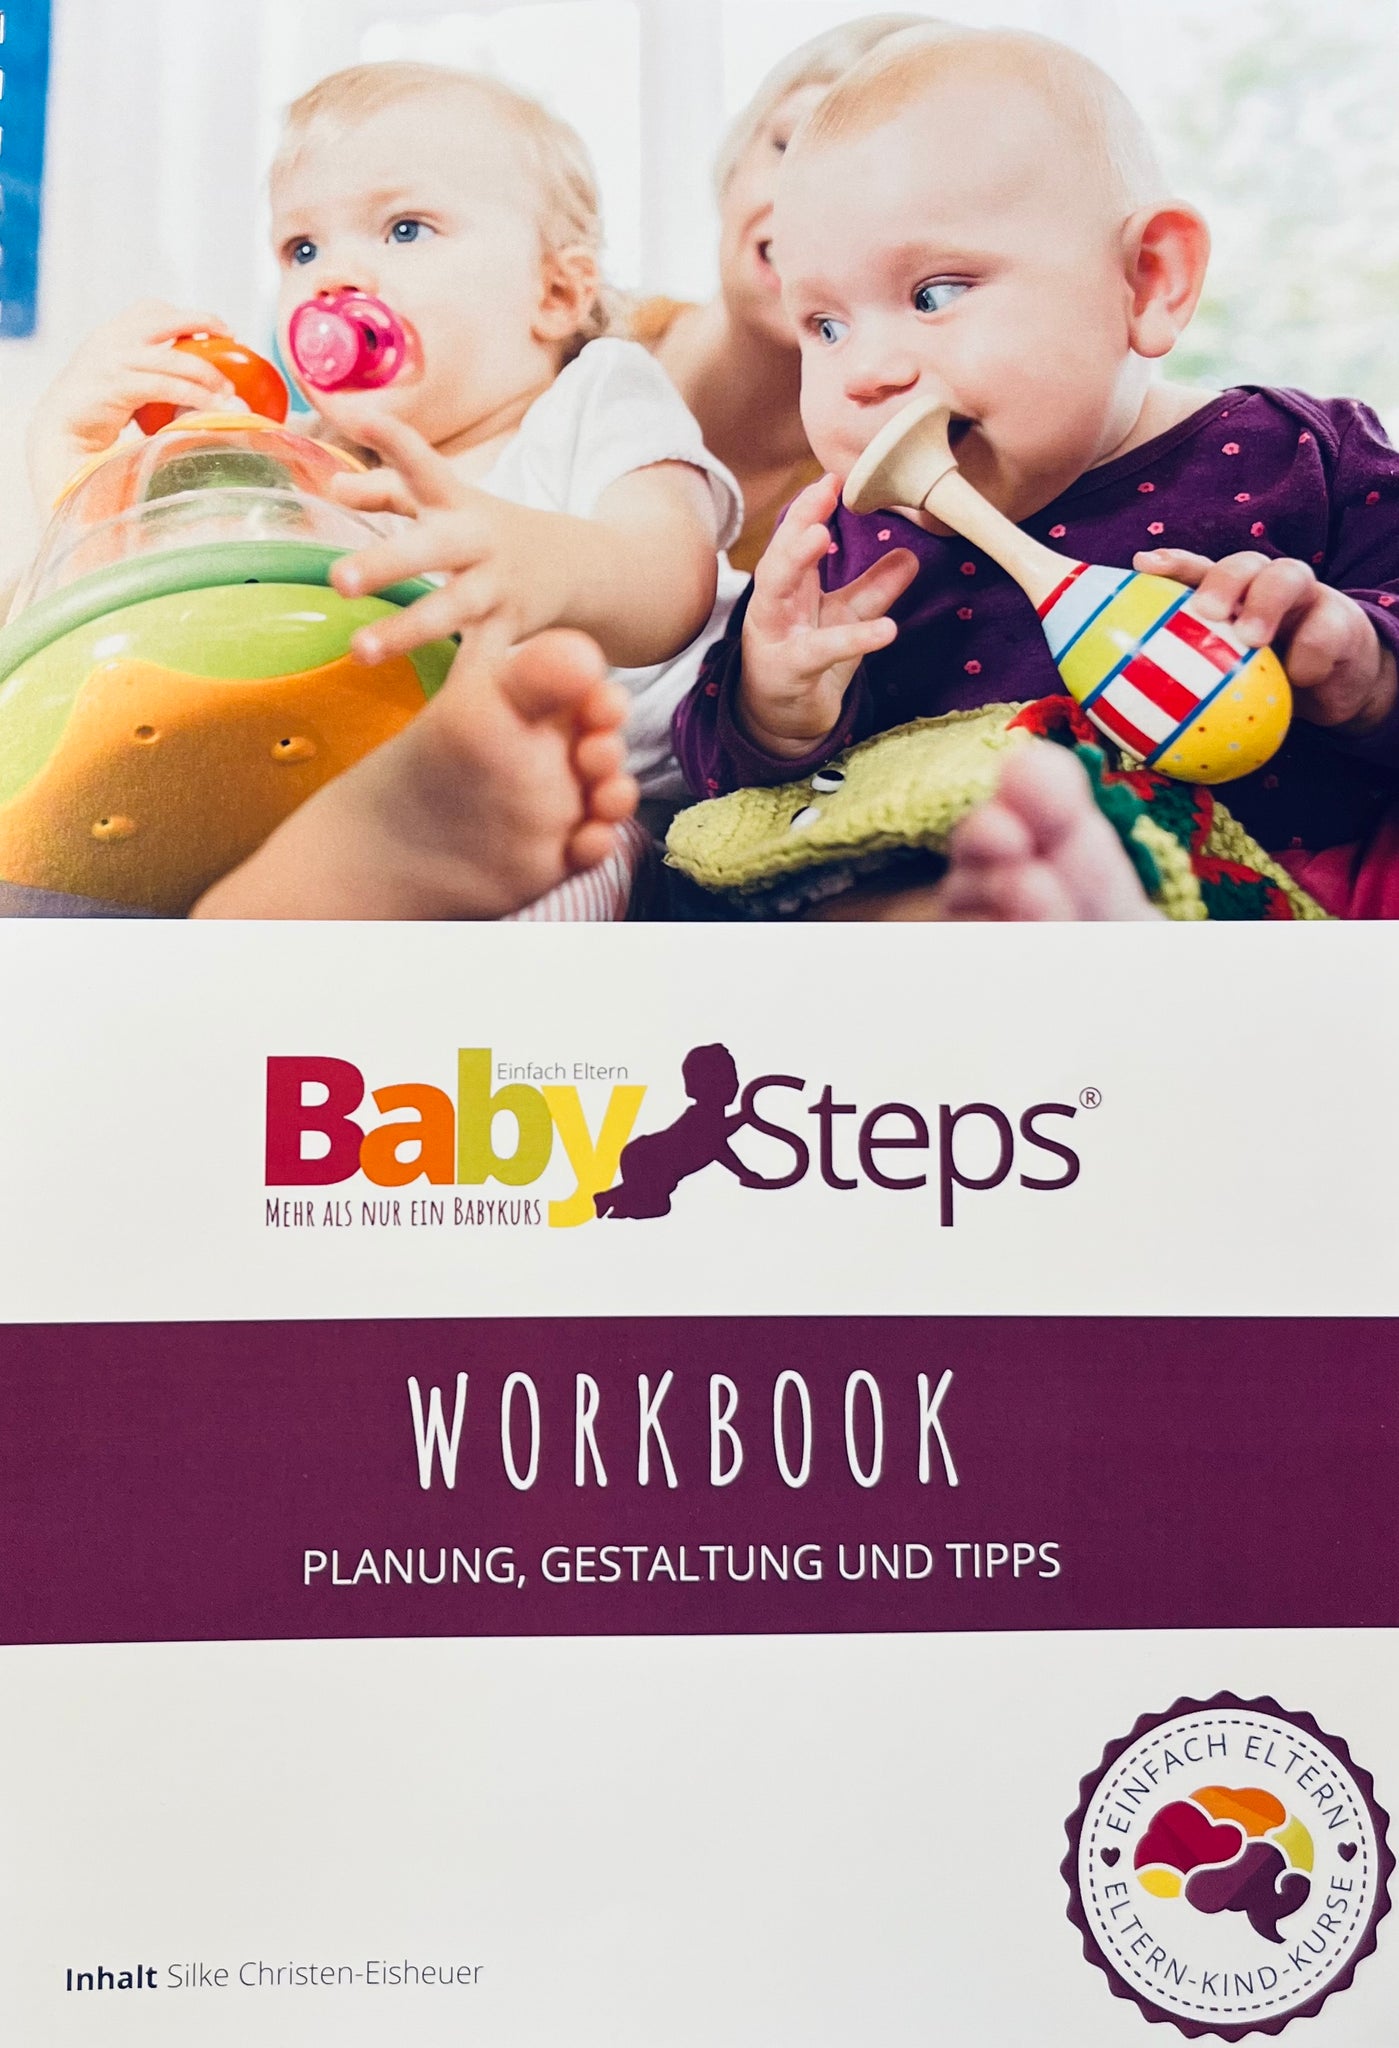 BabySteps Workbook